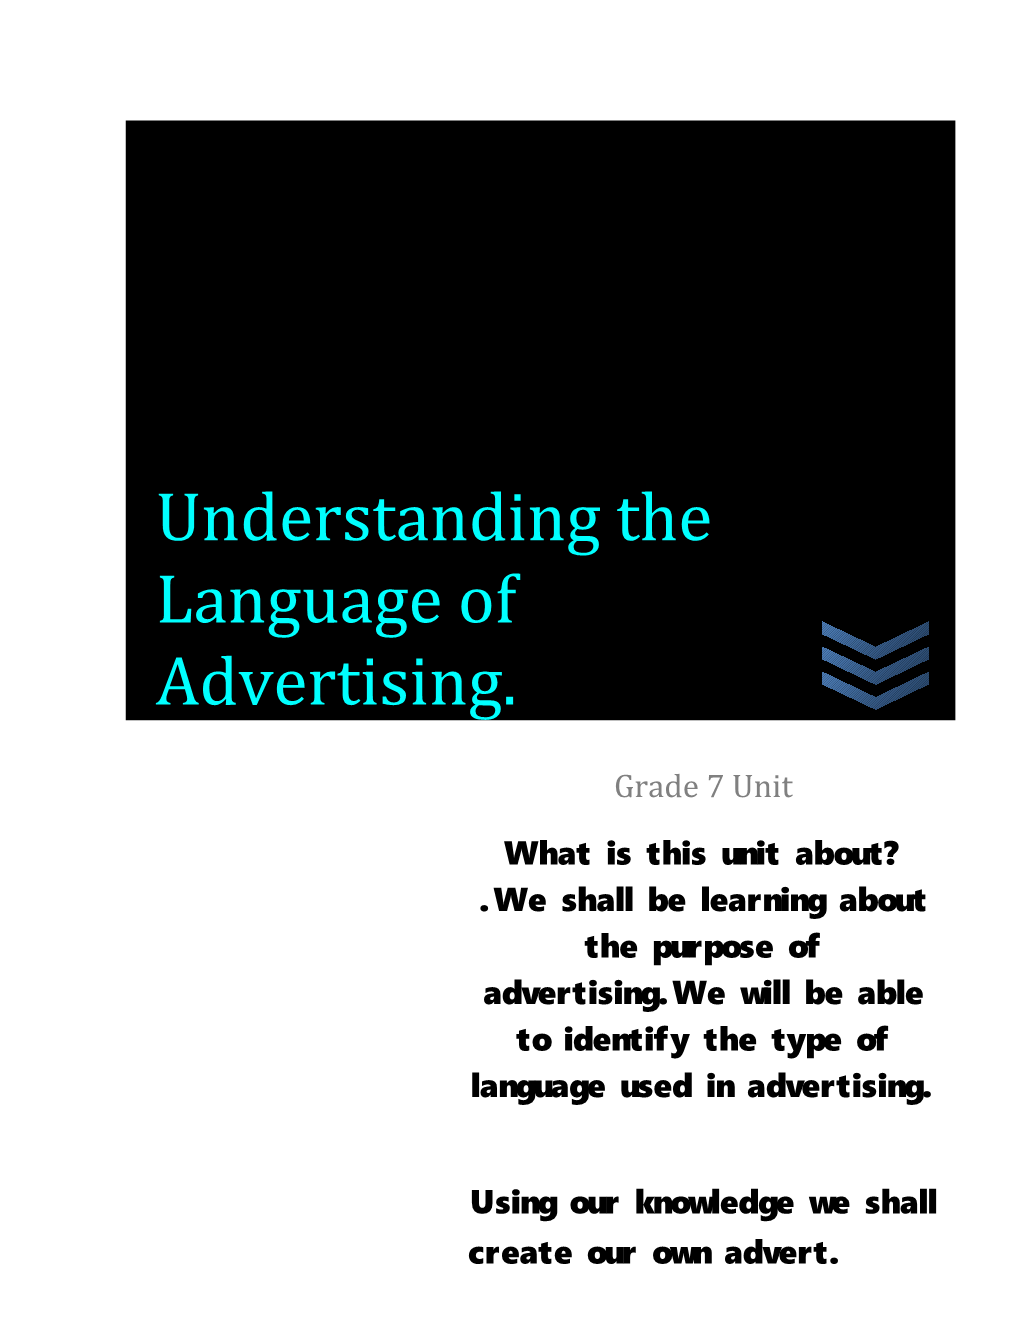 Understanding the Language of Advertising